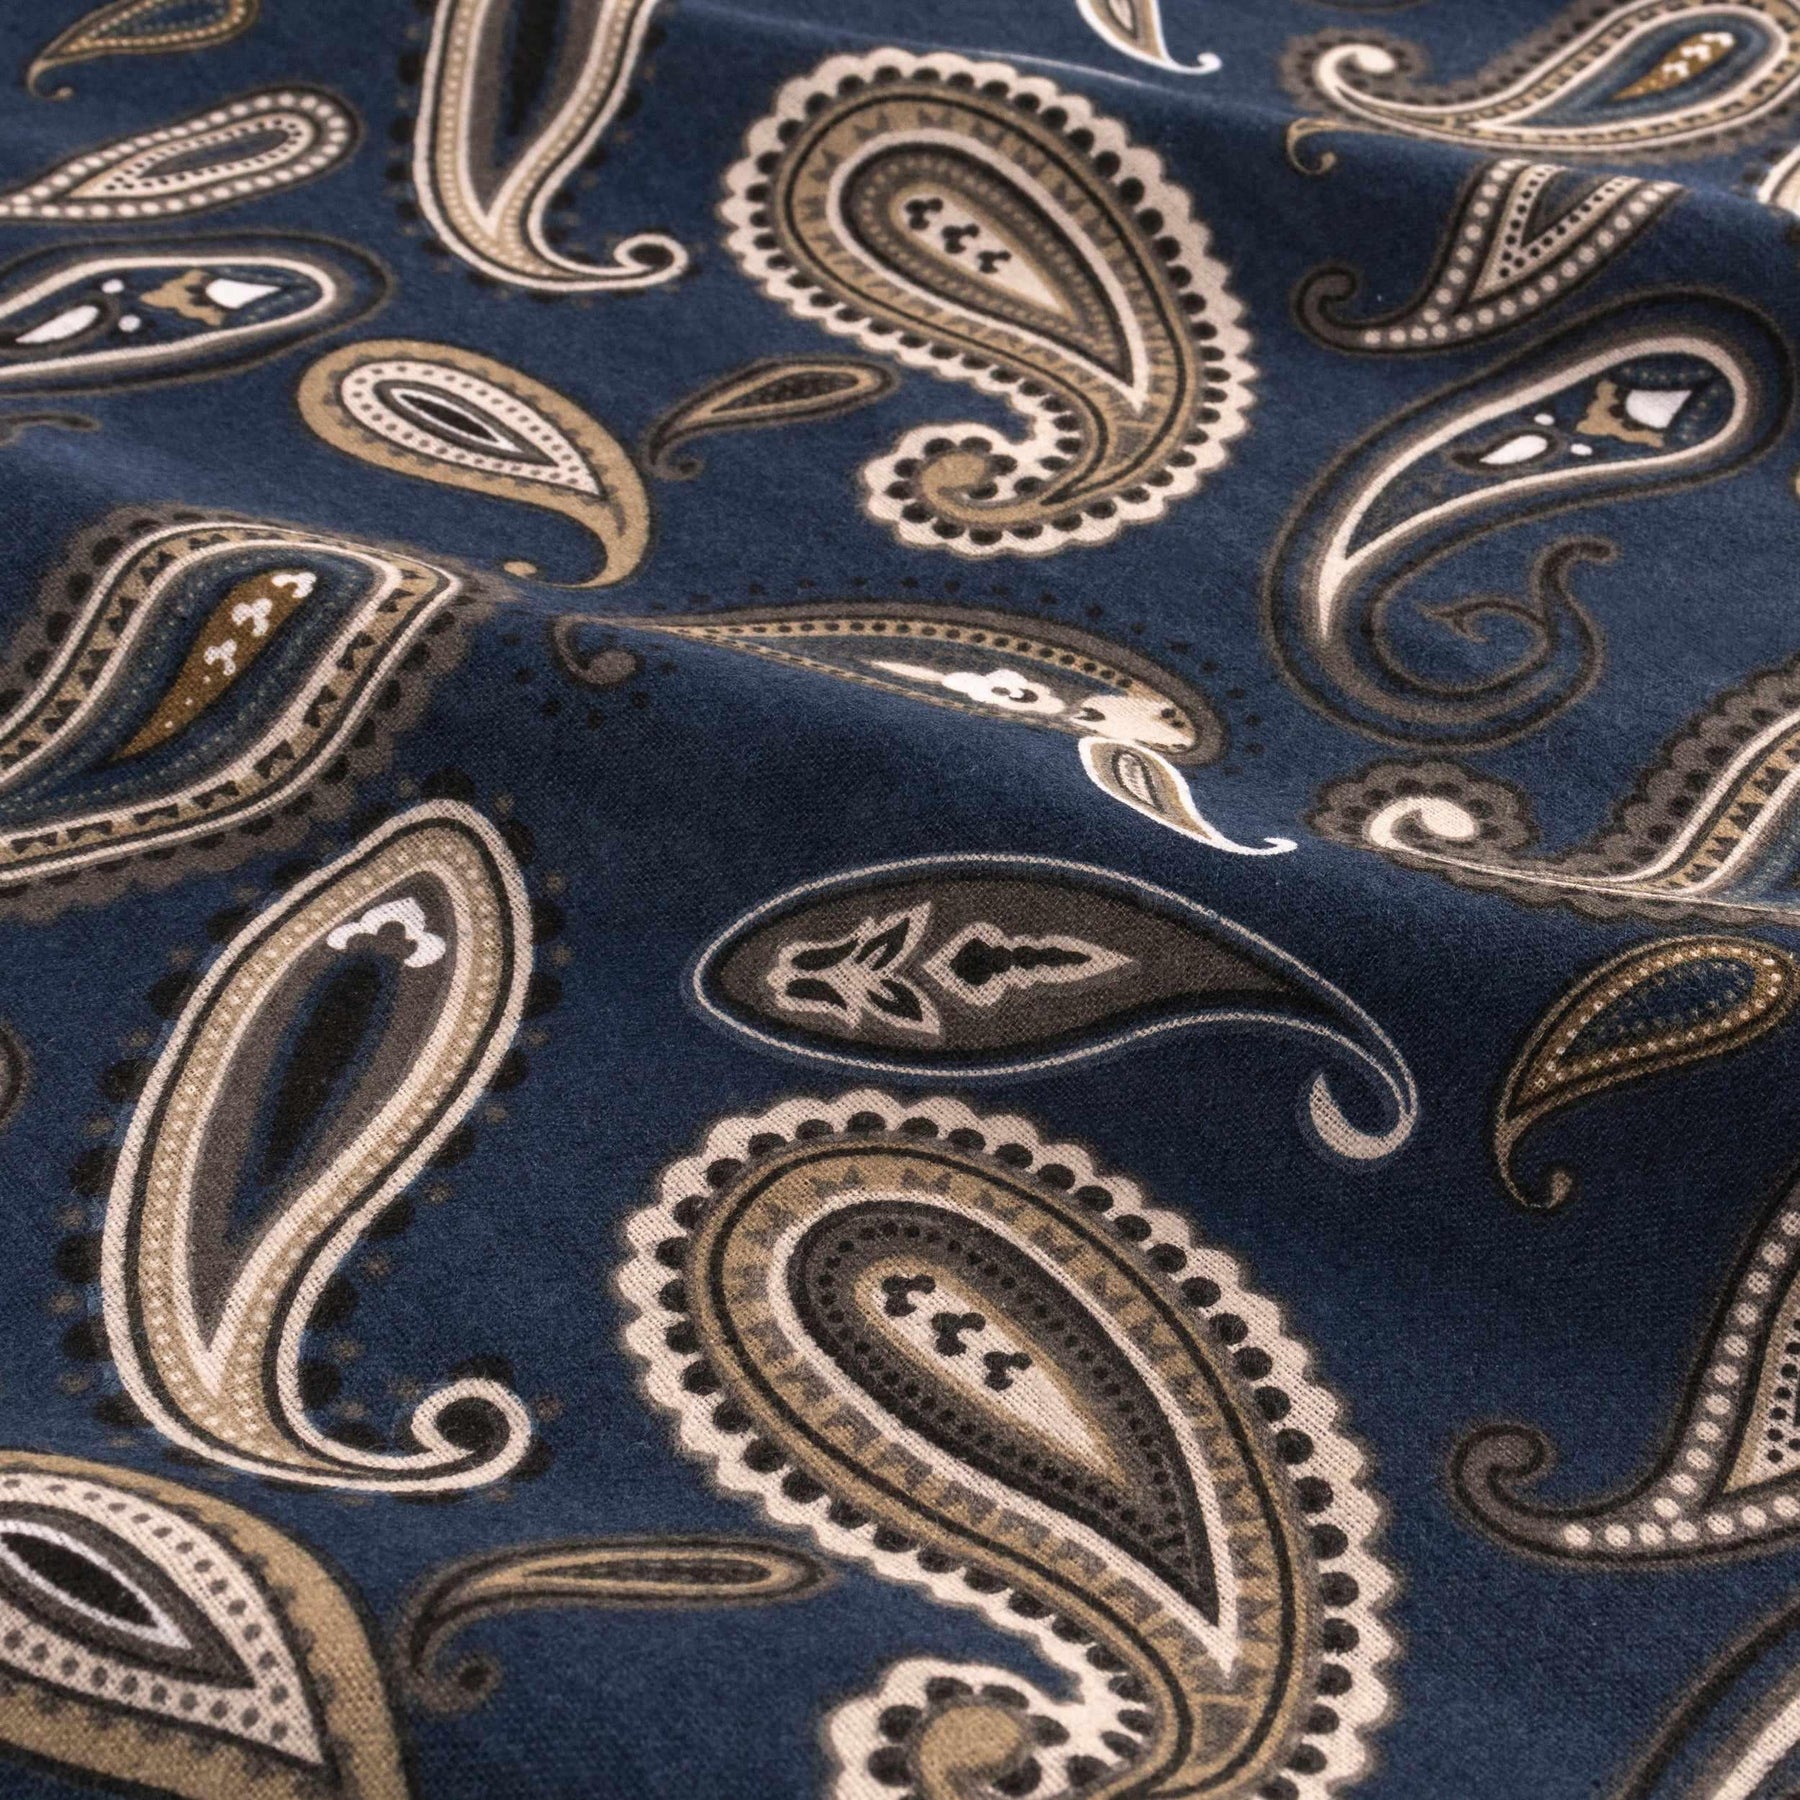  Superior Modern Cotton Flannel Paisley or Solid Deep Pocket Sheet Set -  Navy Blue